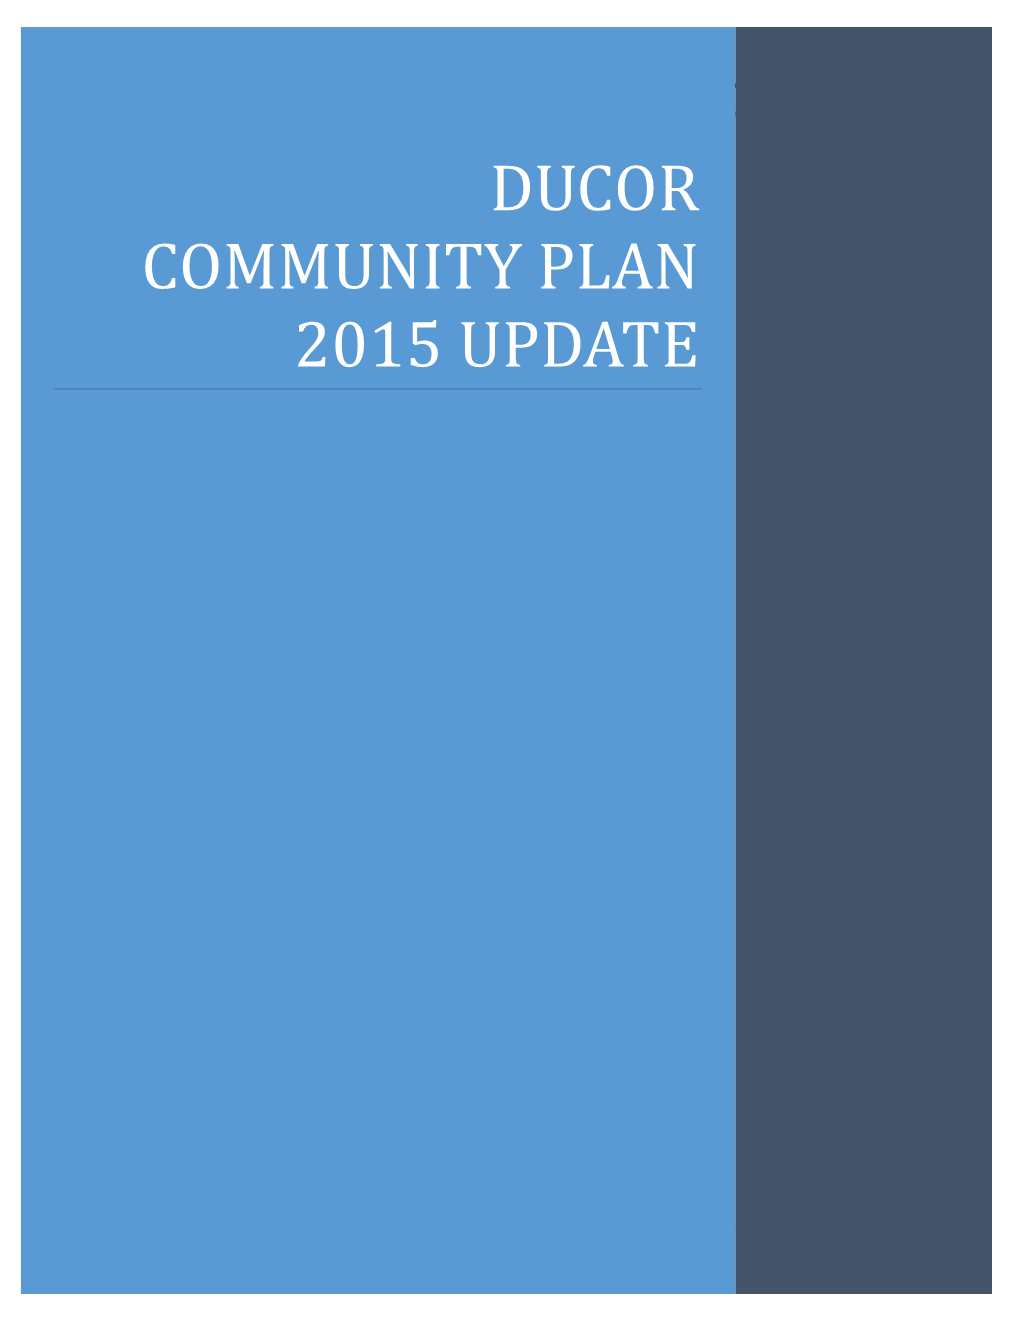 Ducor Community Plan